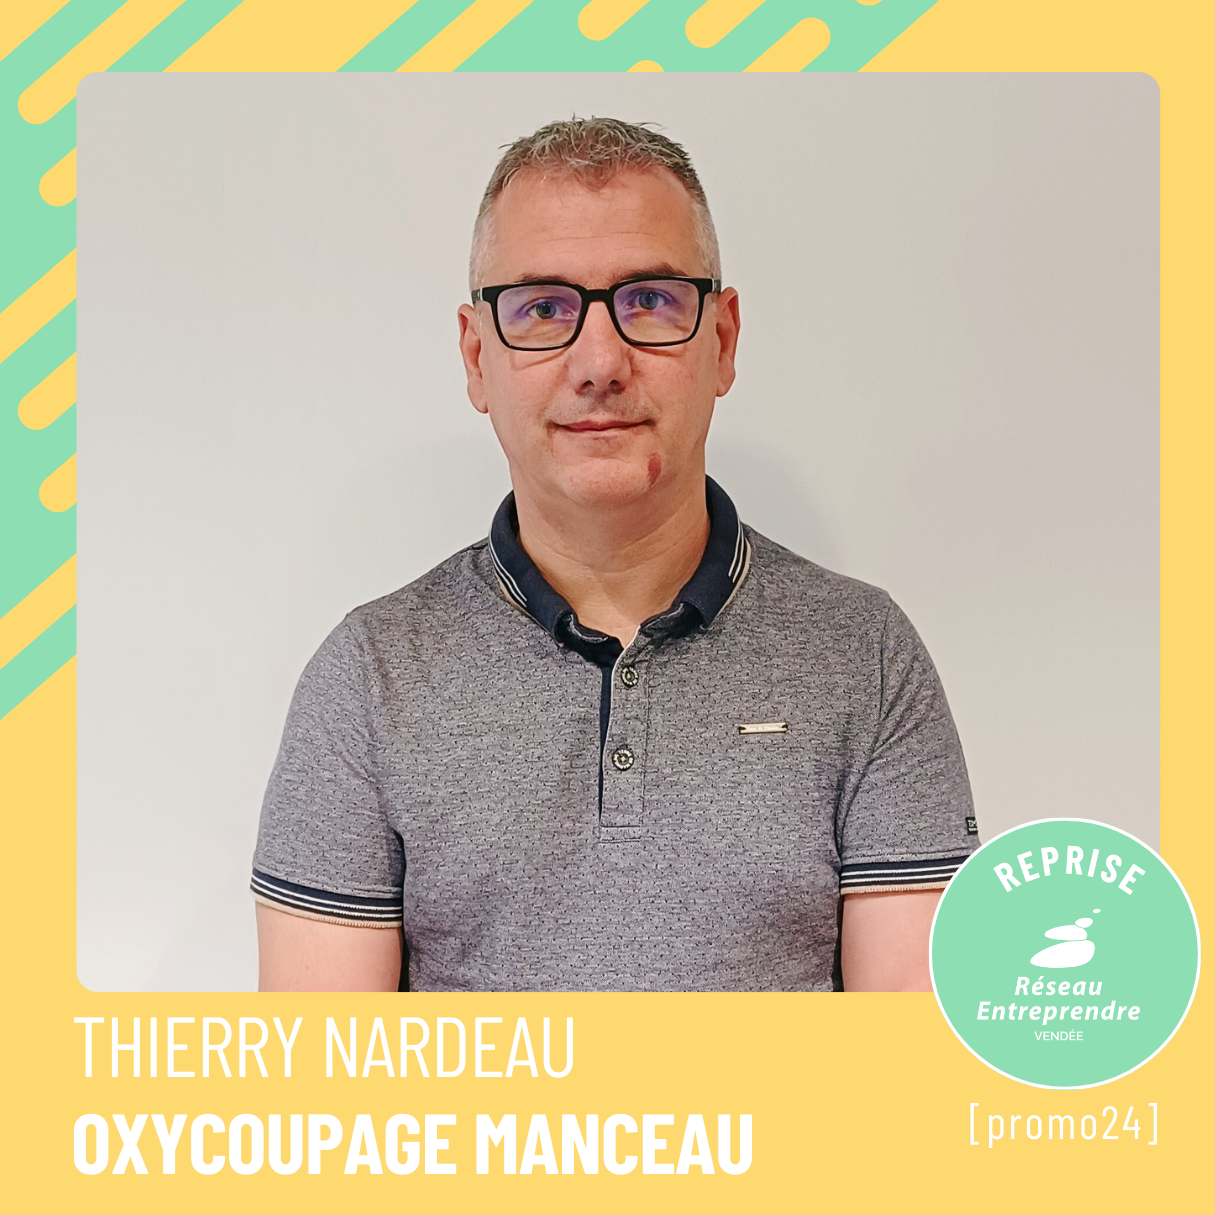 OXYCOUPAGE MANCEAU [Reprise] : Thierry NARDEAU